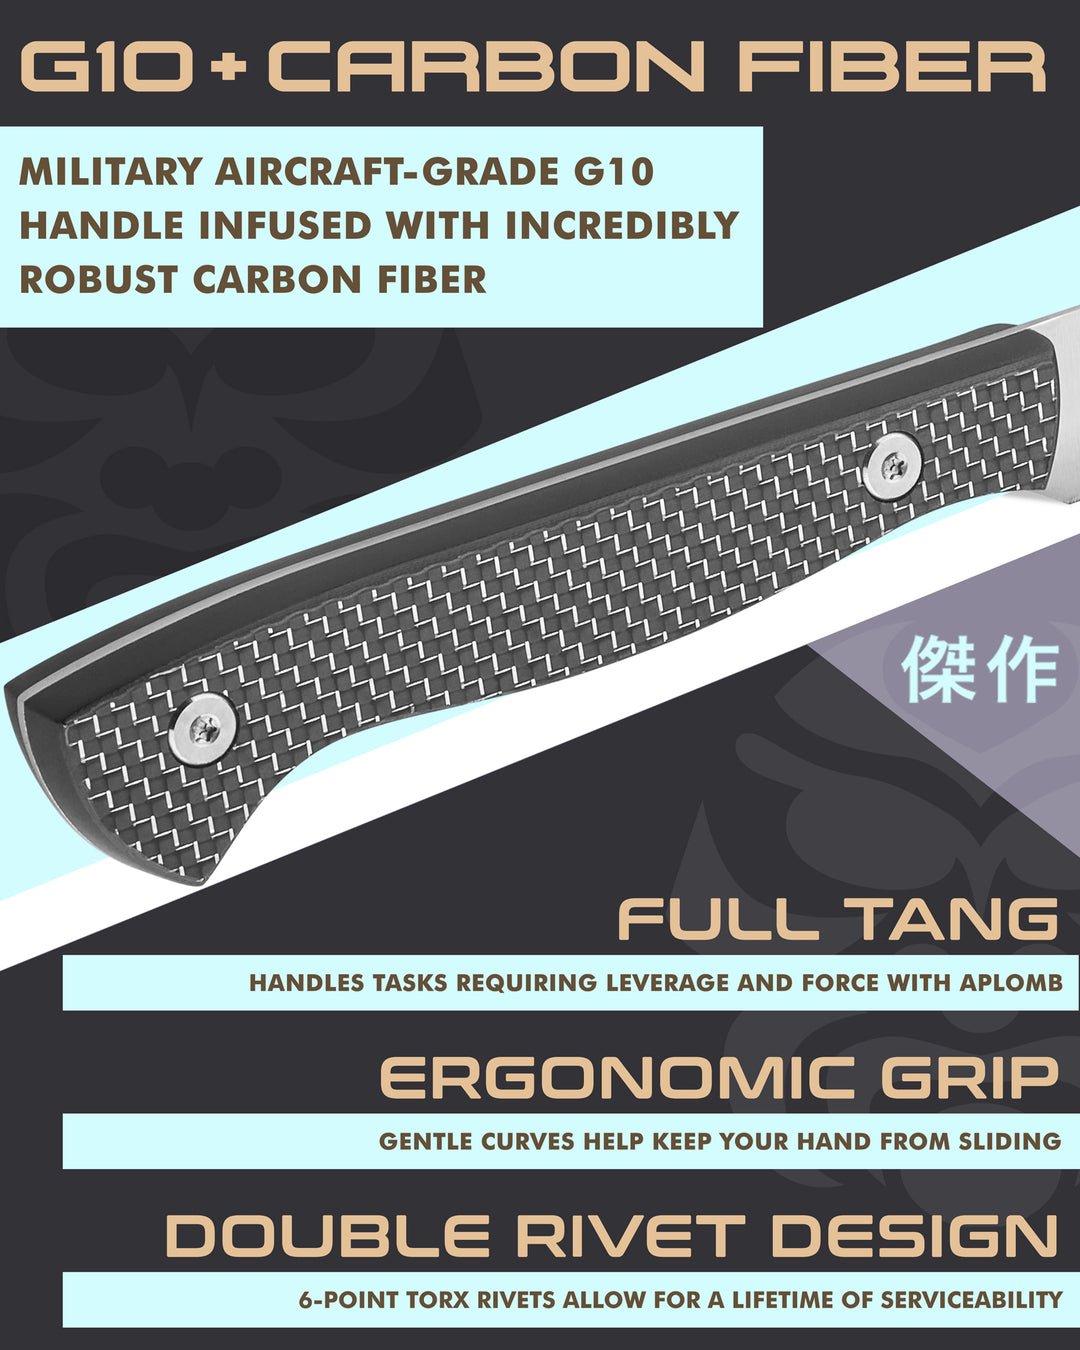 Kessaku Senshi Paring Knife handle features: Carbon fiber infused G10 handle, full tang, ergonomic grip, double torx rivet design